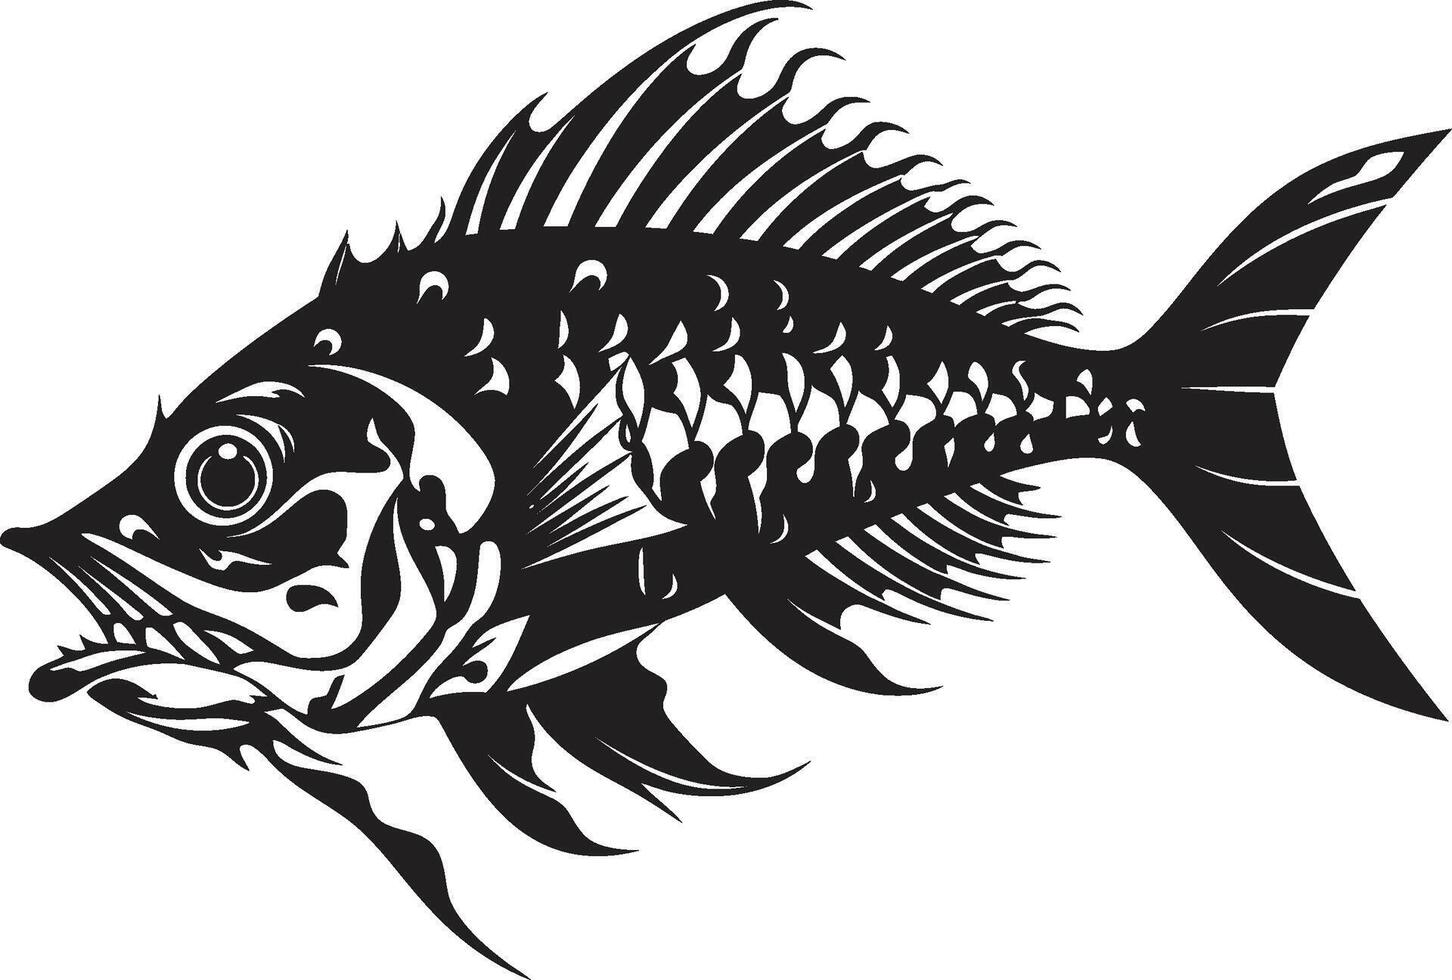 Phantom Physiology Logo of Predator Fish Skeleton in Black Grim Gills Black Iconic Predator Fish Skeleton Design vector